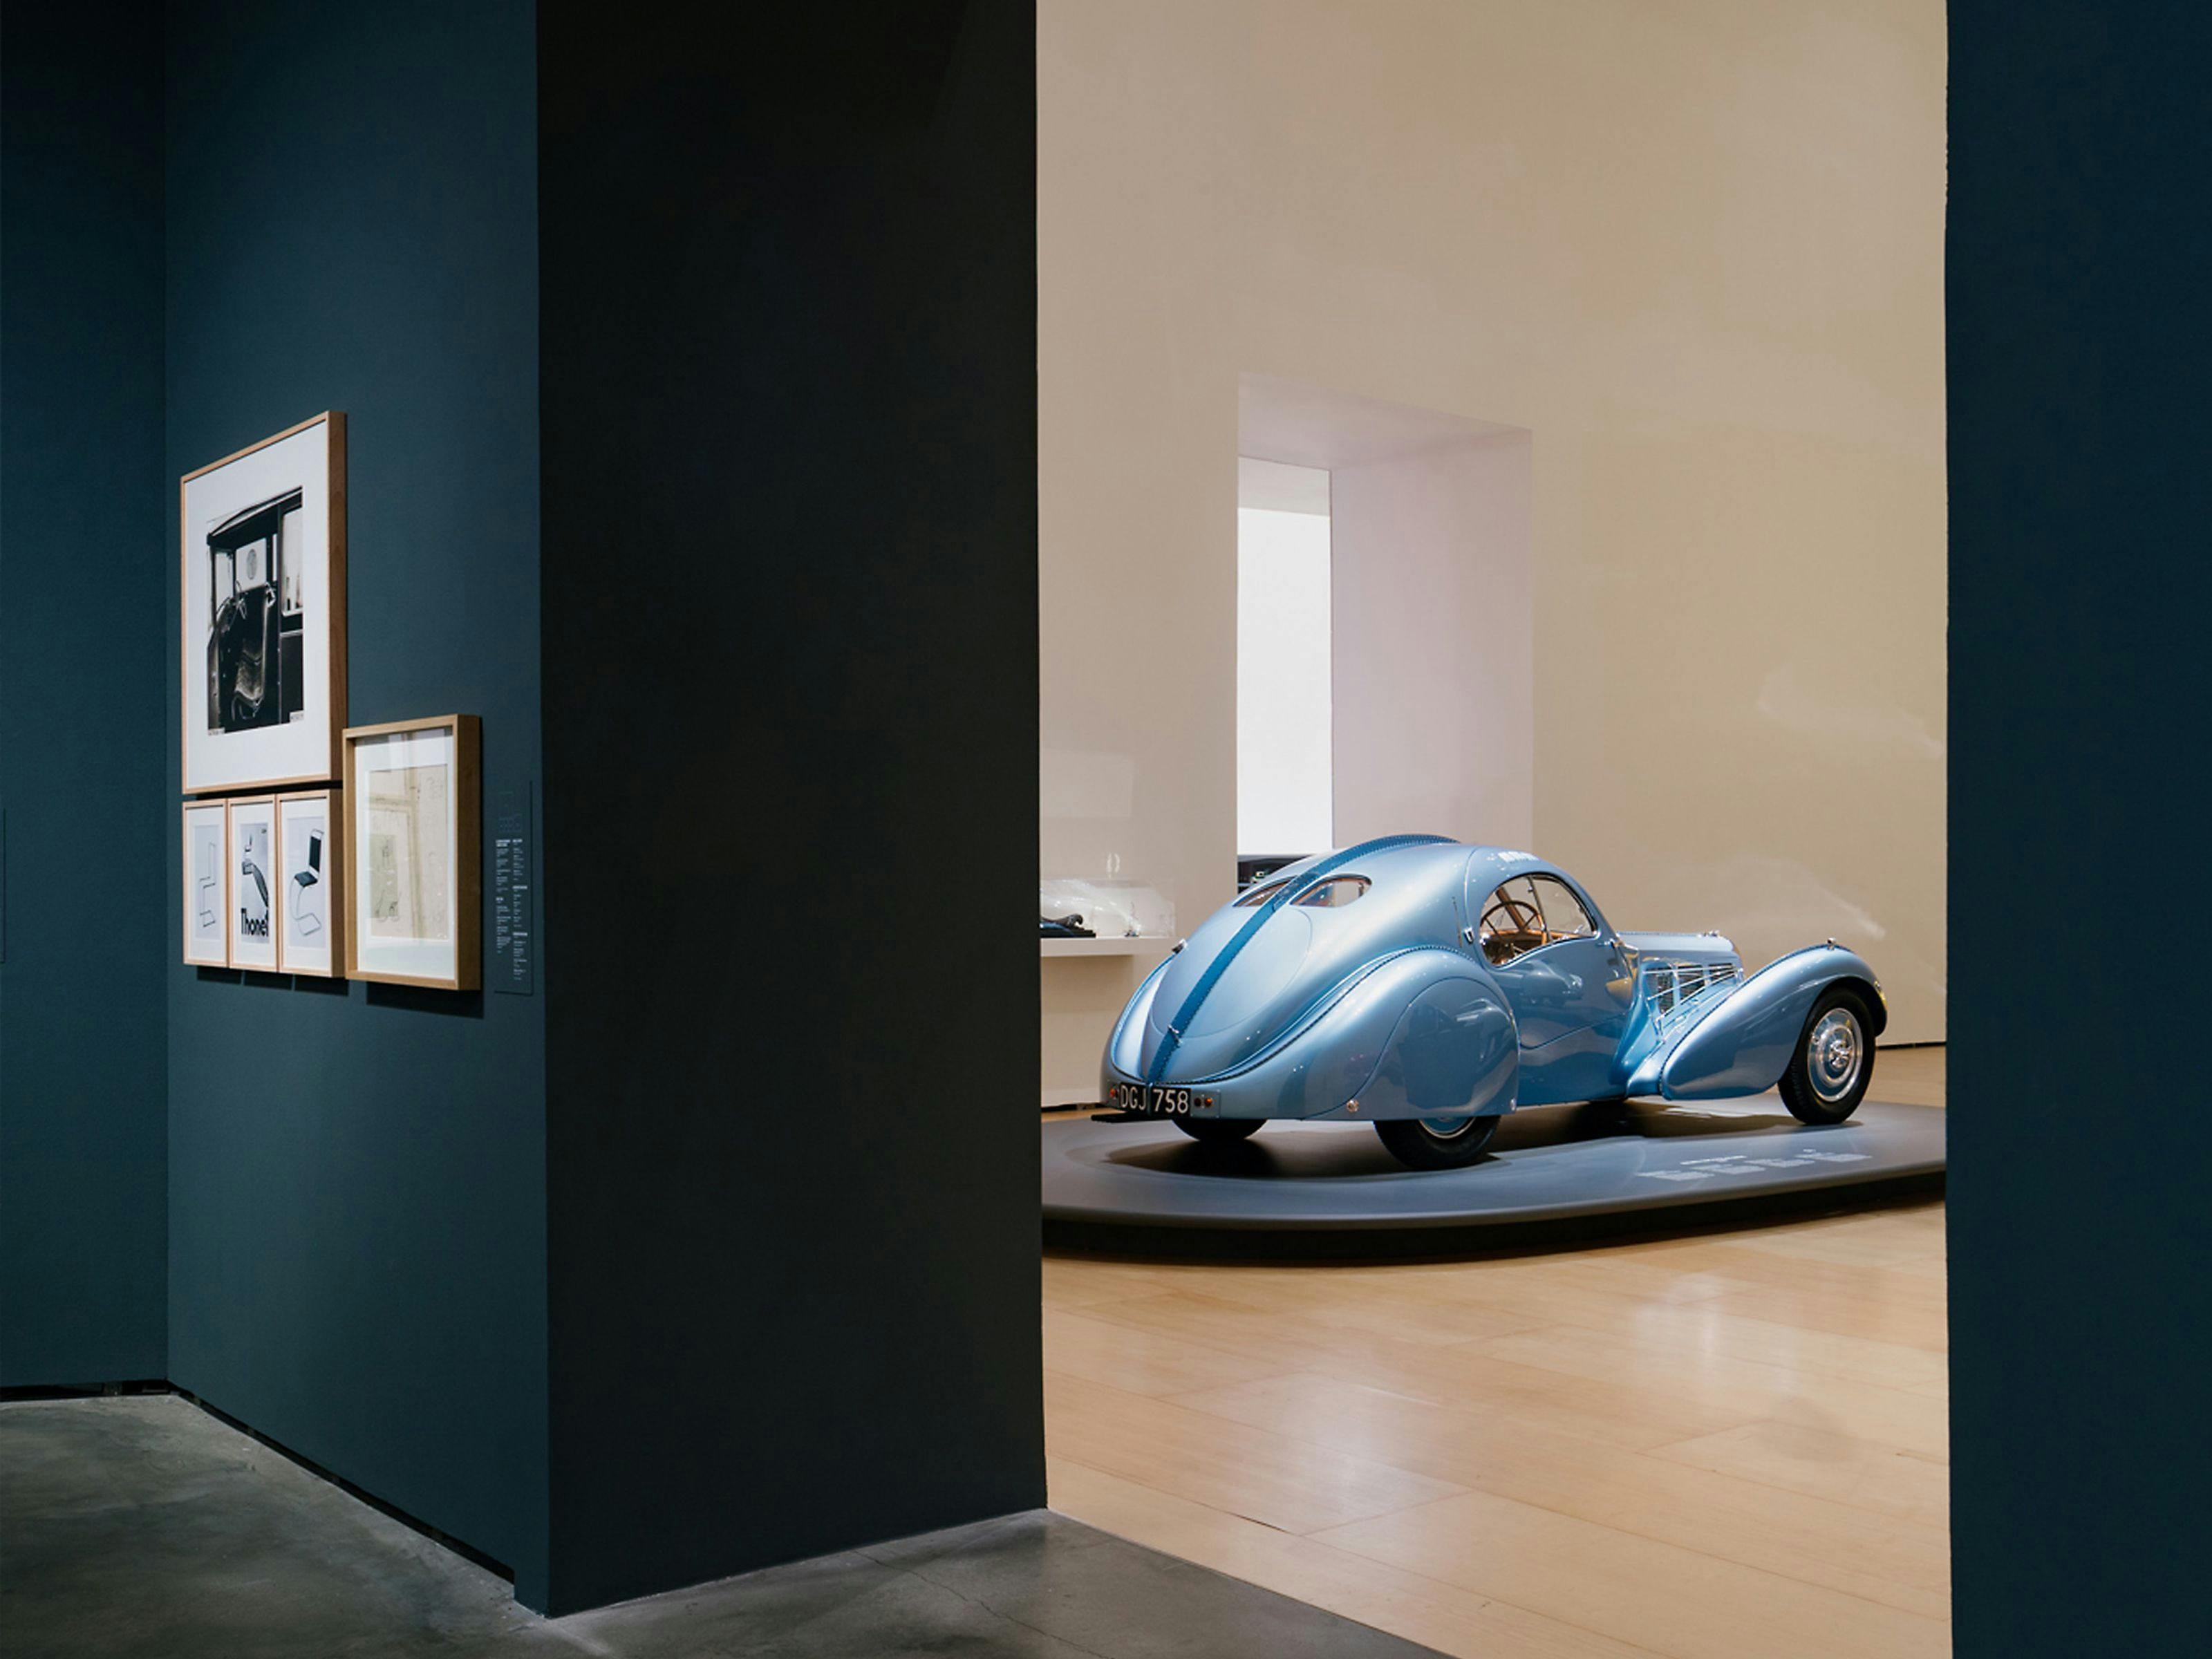 Guggenheim Museum Bilbao stellt Bugatti Type 57 SC Atlantic aus